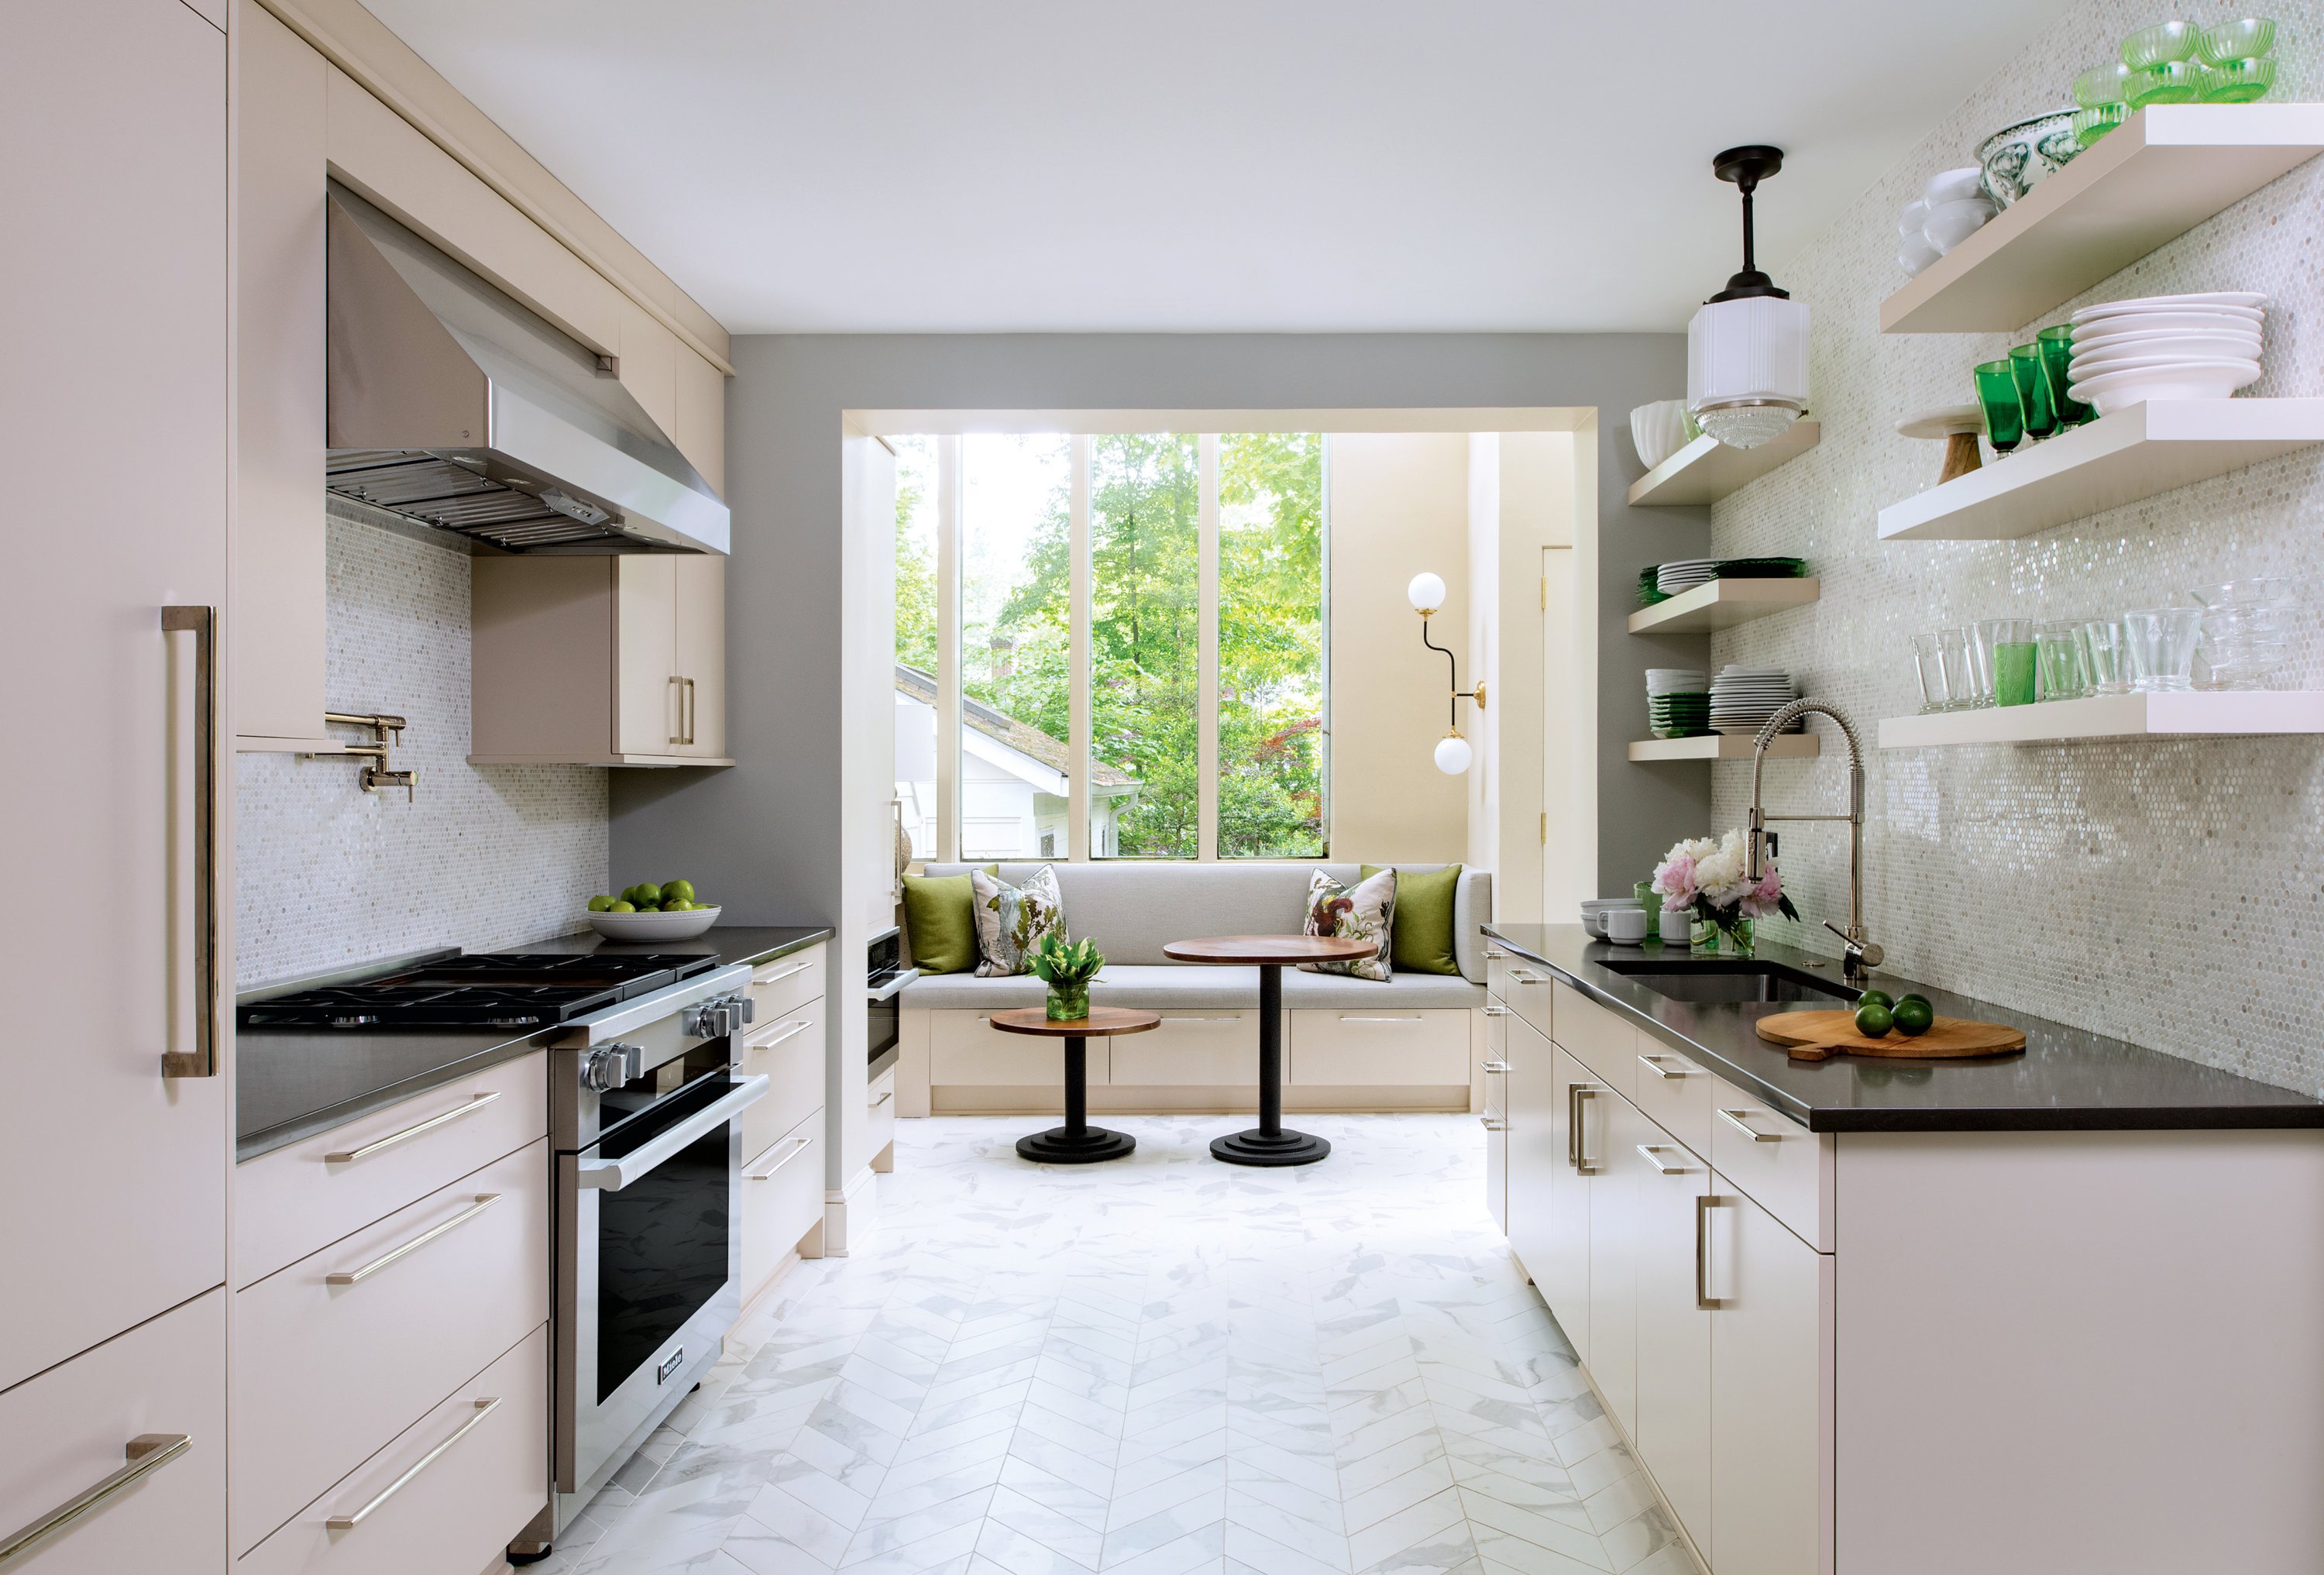 No Detail Was Spared In This Art Deco Inspired Kitchen In Upper Northwest